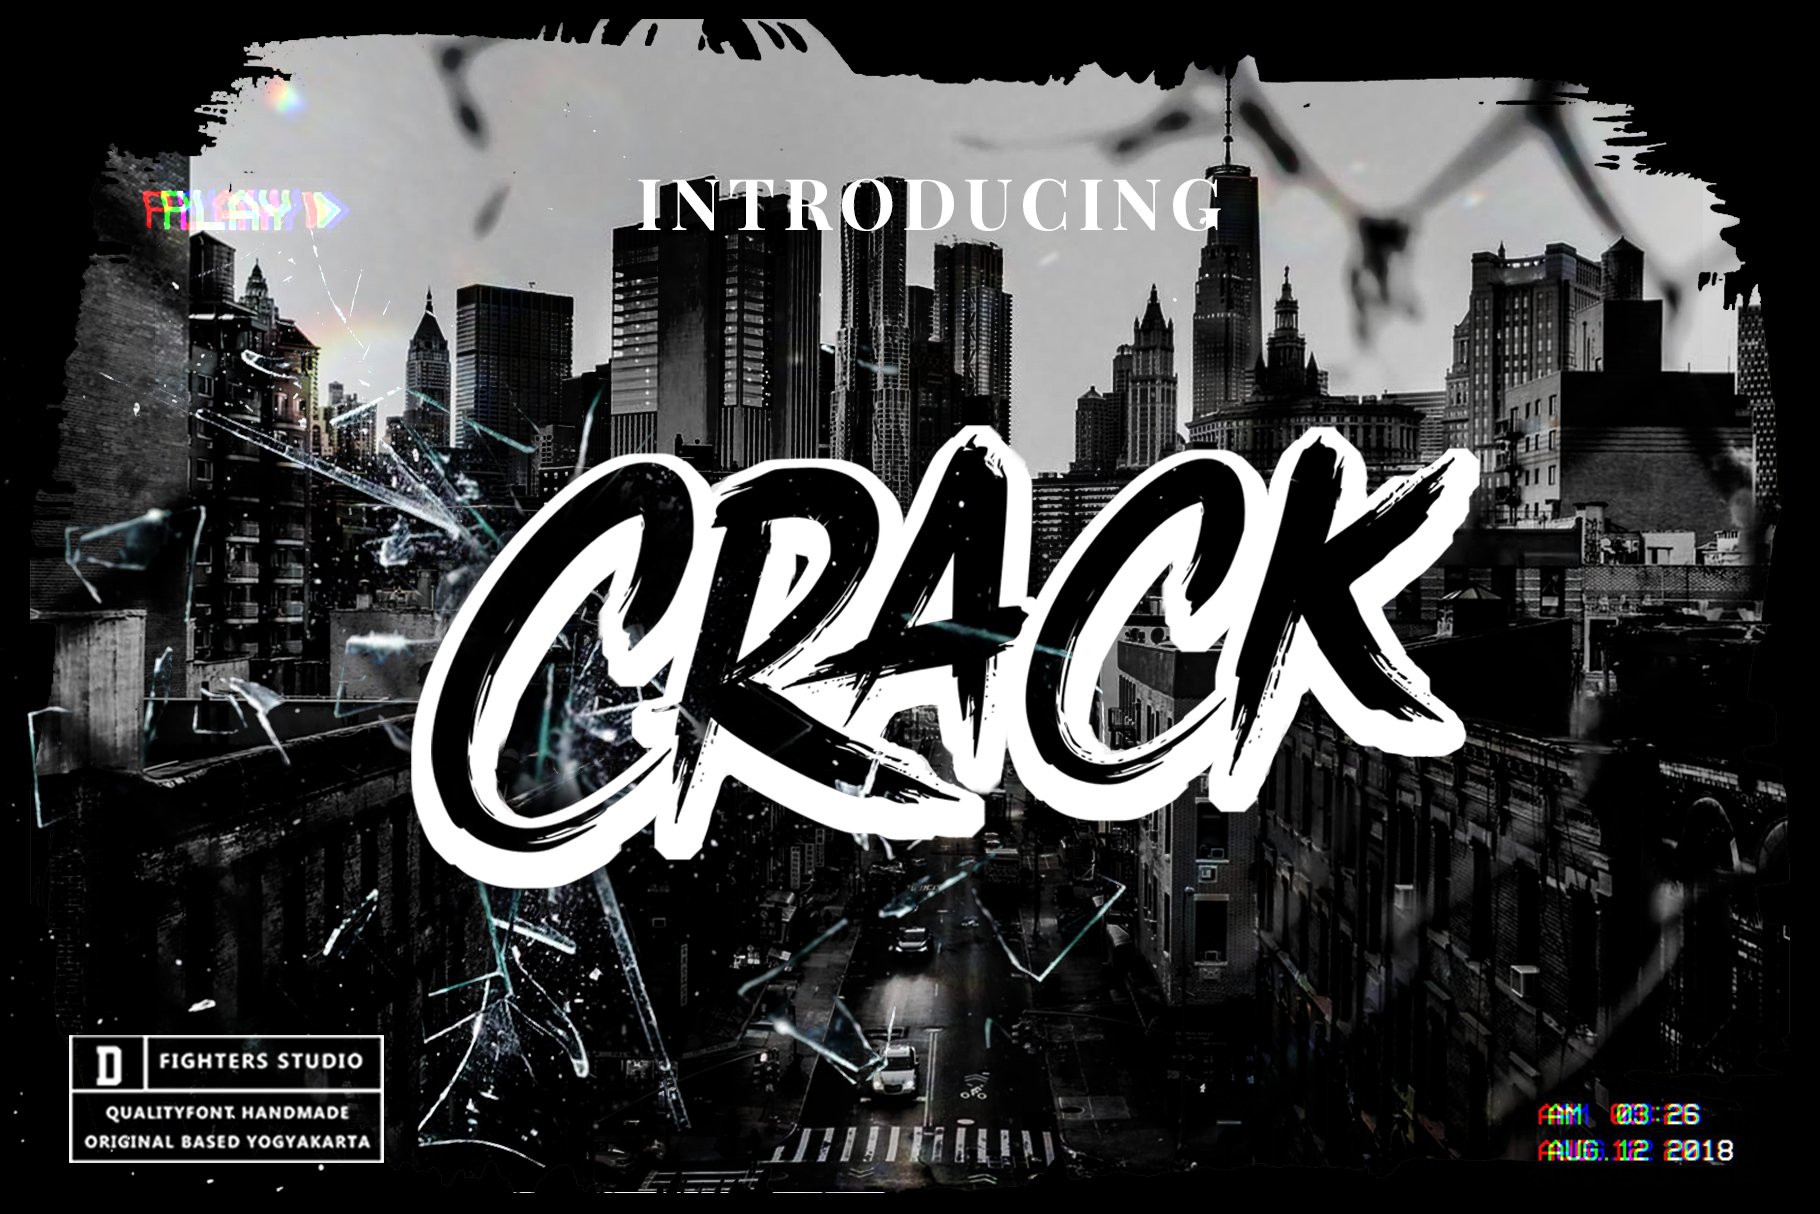 Crack brush font cover image.